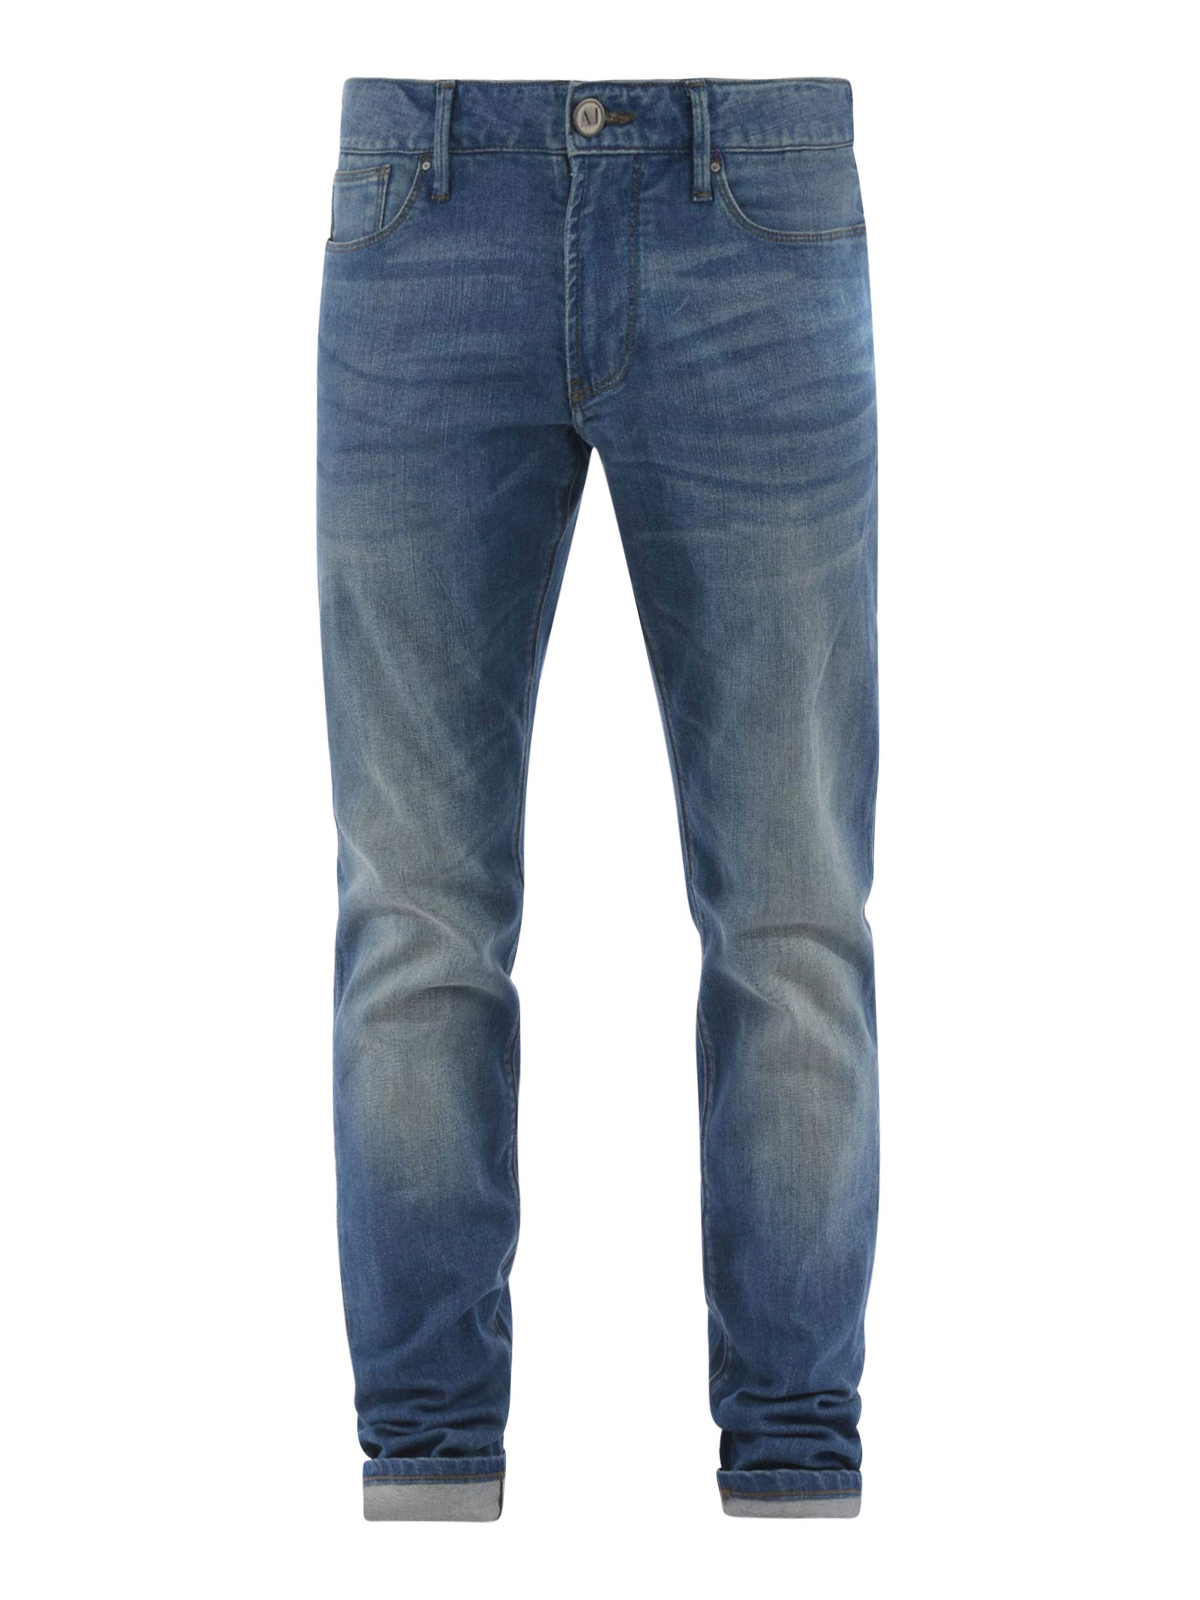 Straight leg jeans Armani Jeans - Faded denim jeans - 3Y6J066DABZ1500